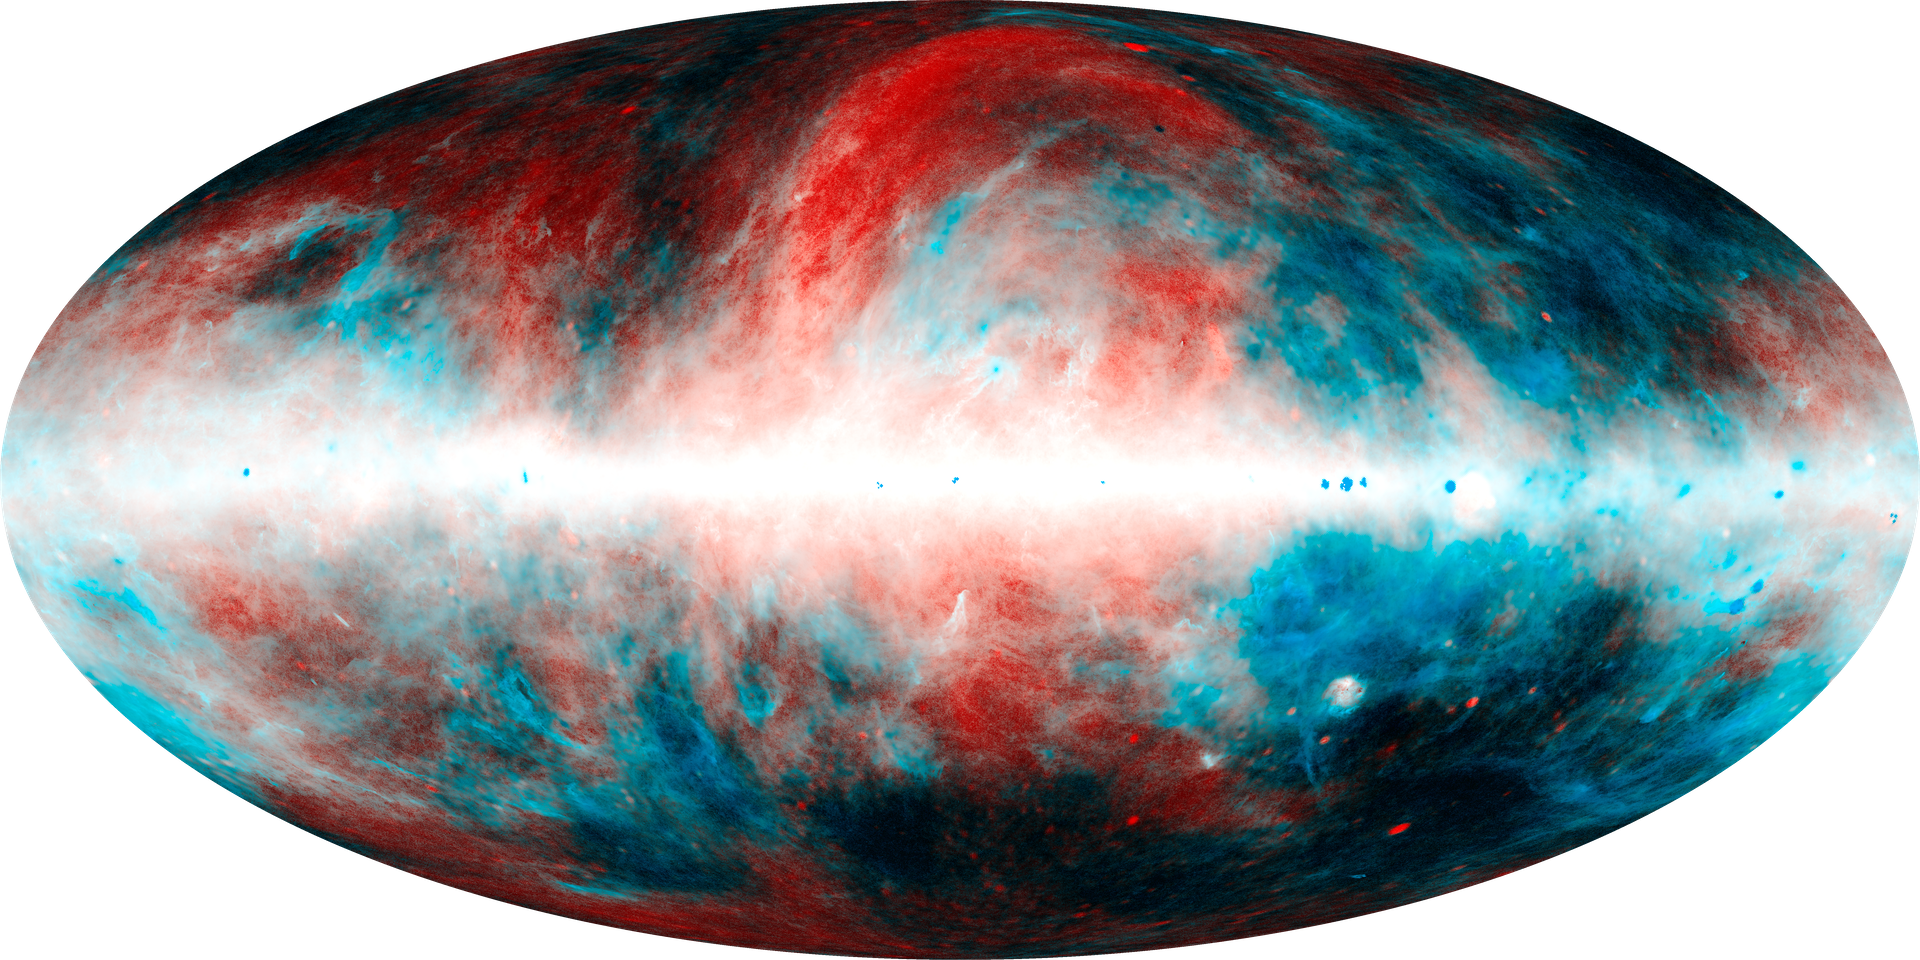 Planck synchrotron and dust false color map